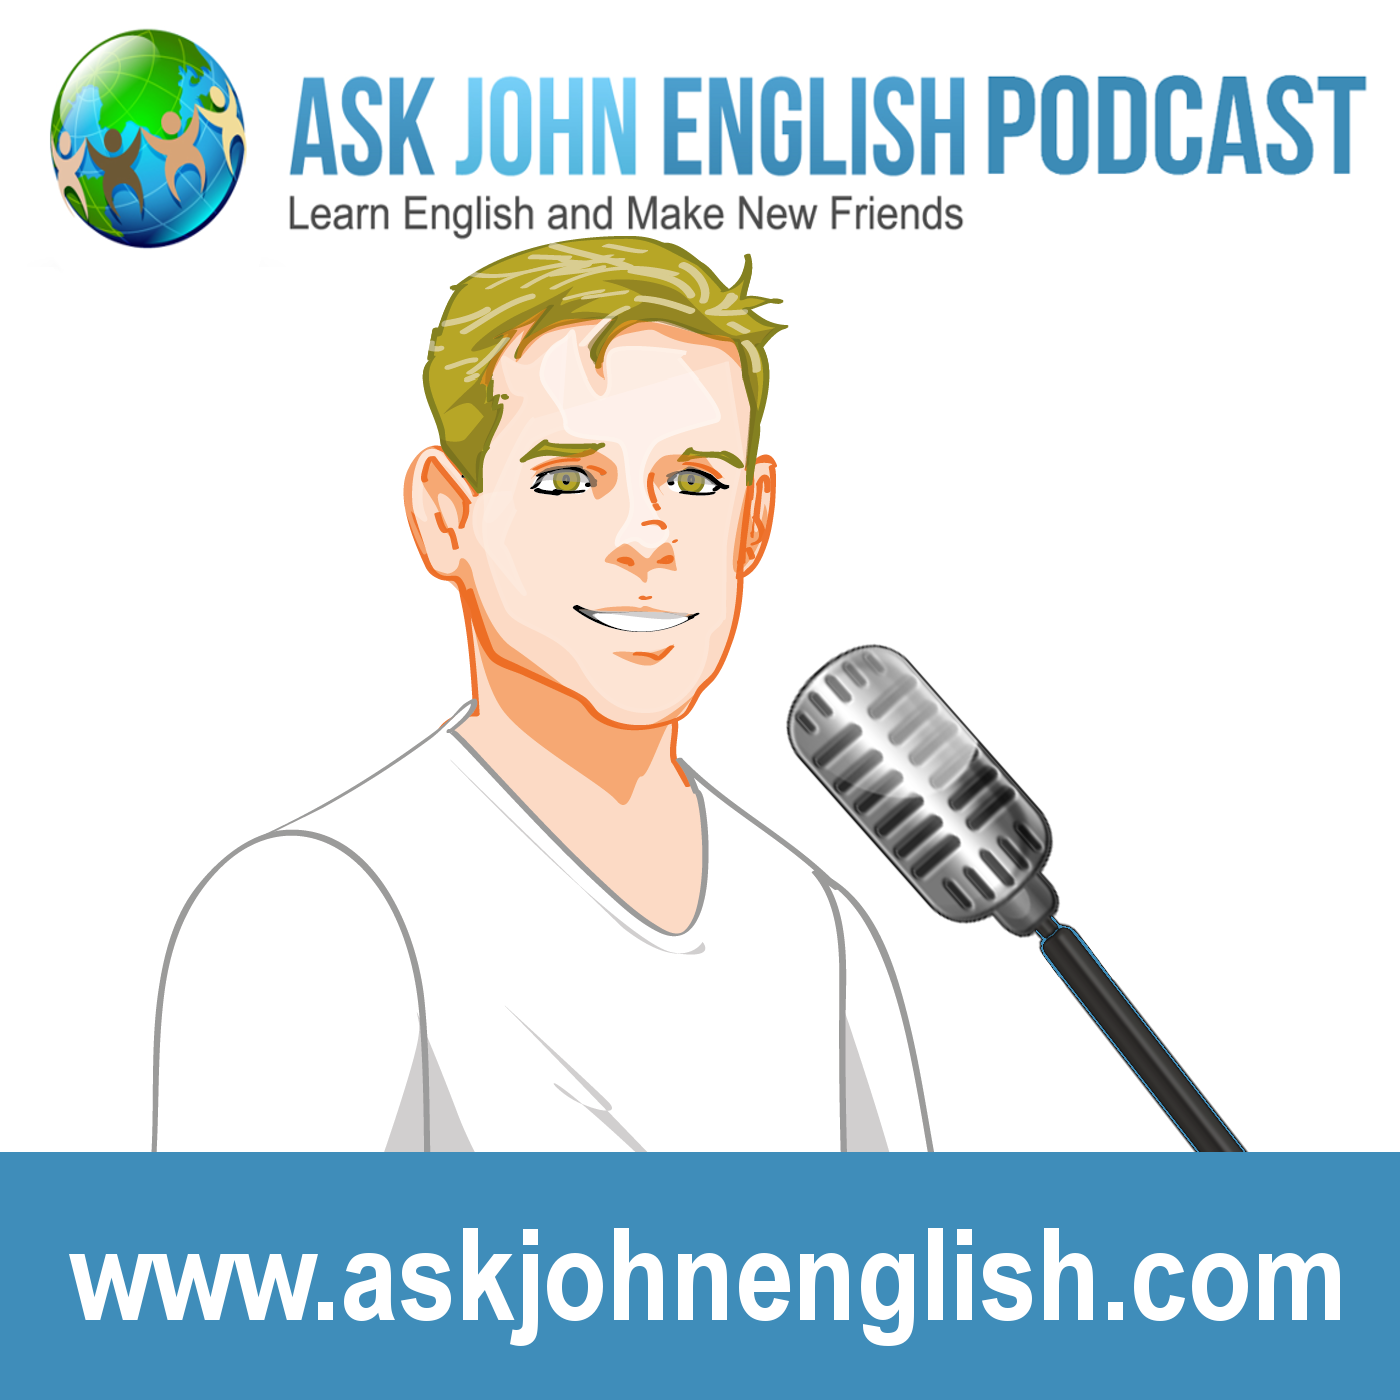 Слушать подкасты на английском. Подкасты на английском. Подкаст на английском для начинающих. Learn English Podcasts. Podcast for Learning English.